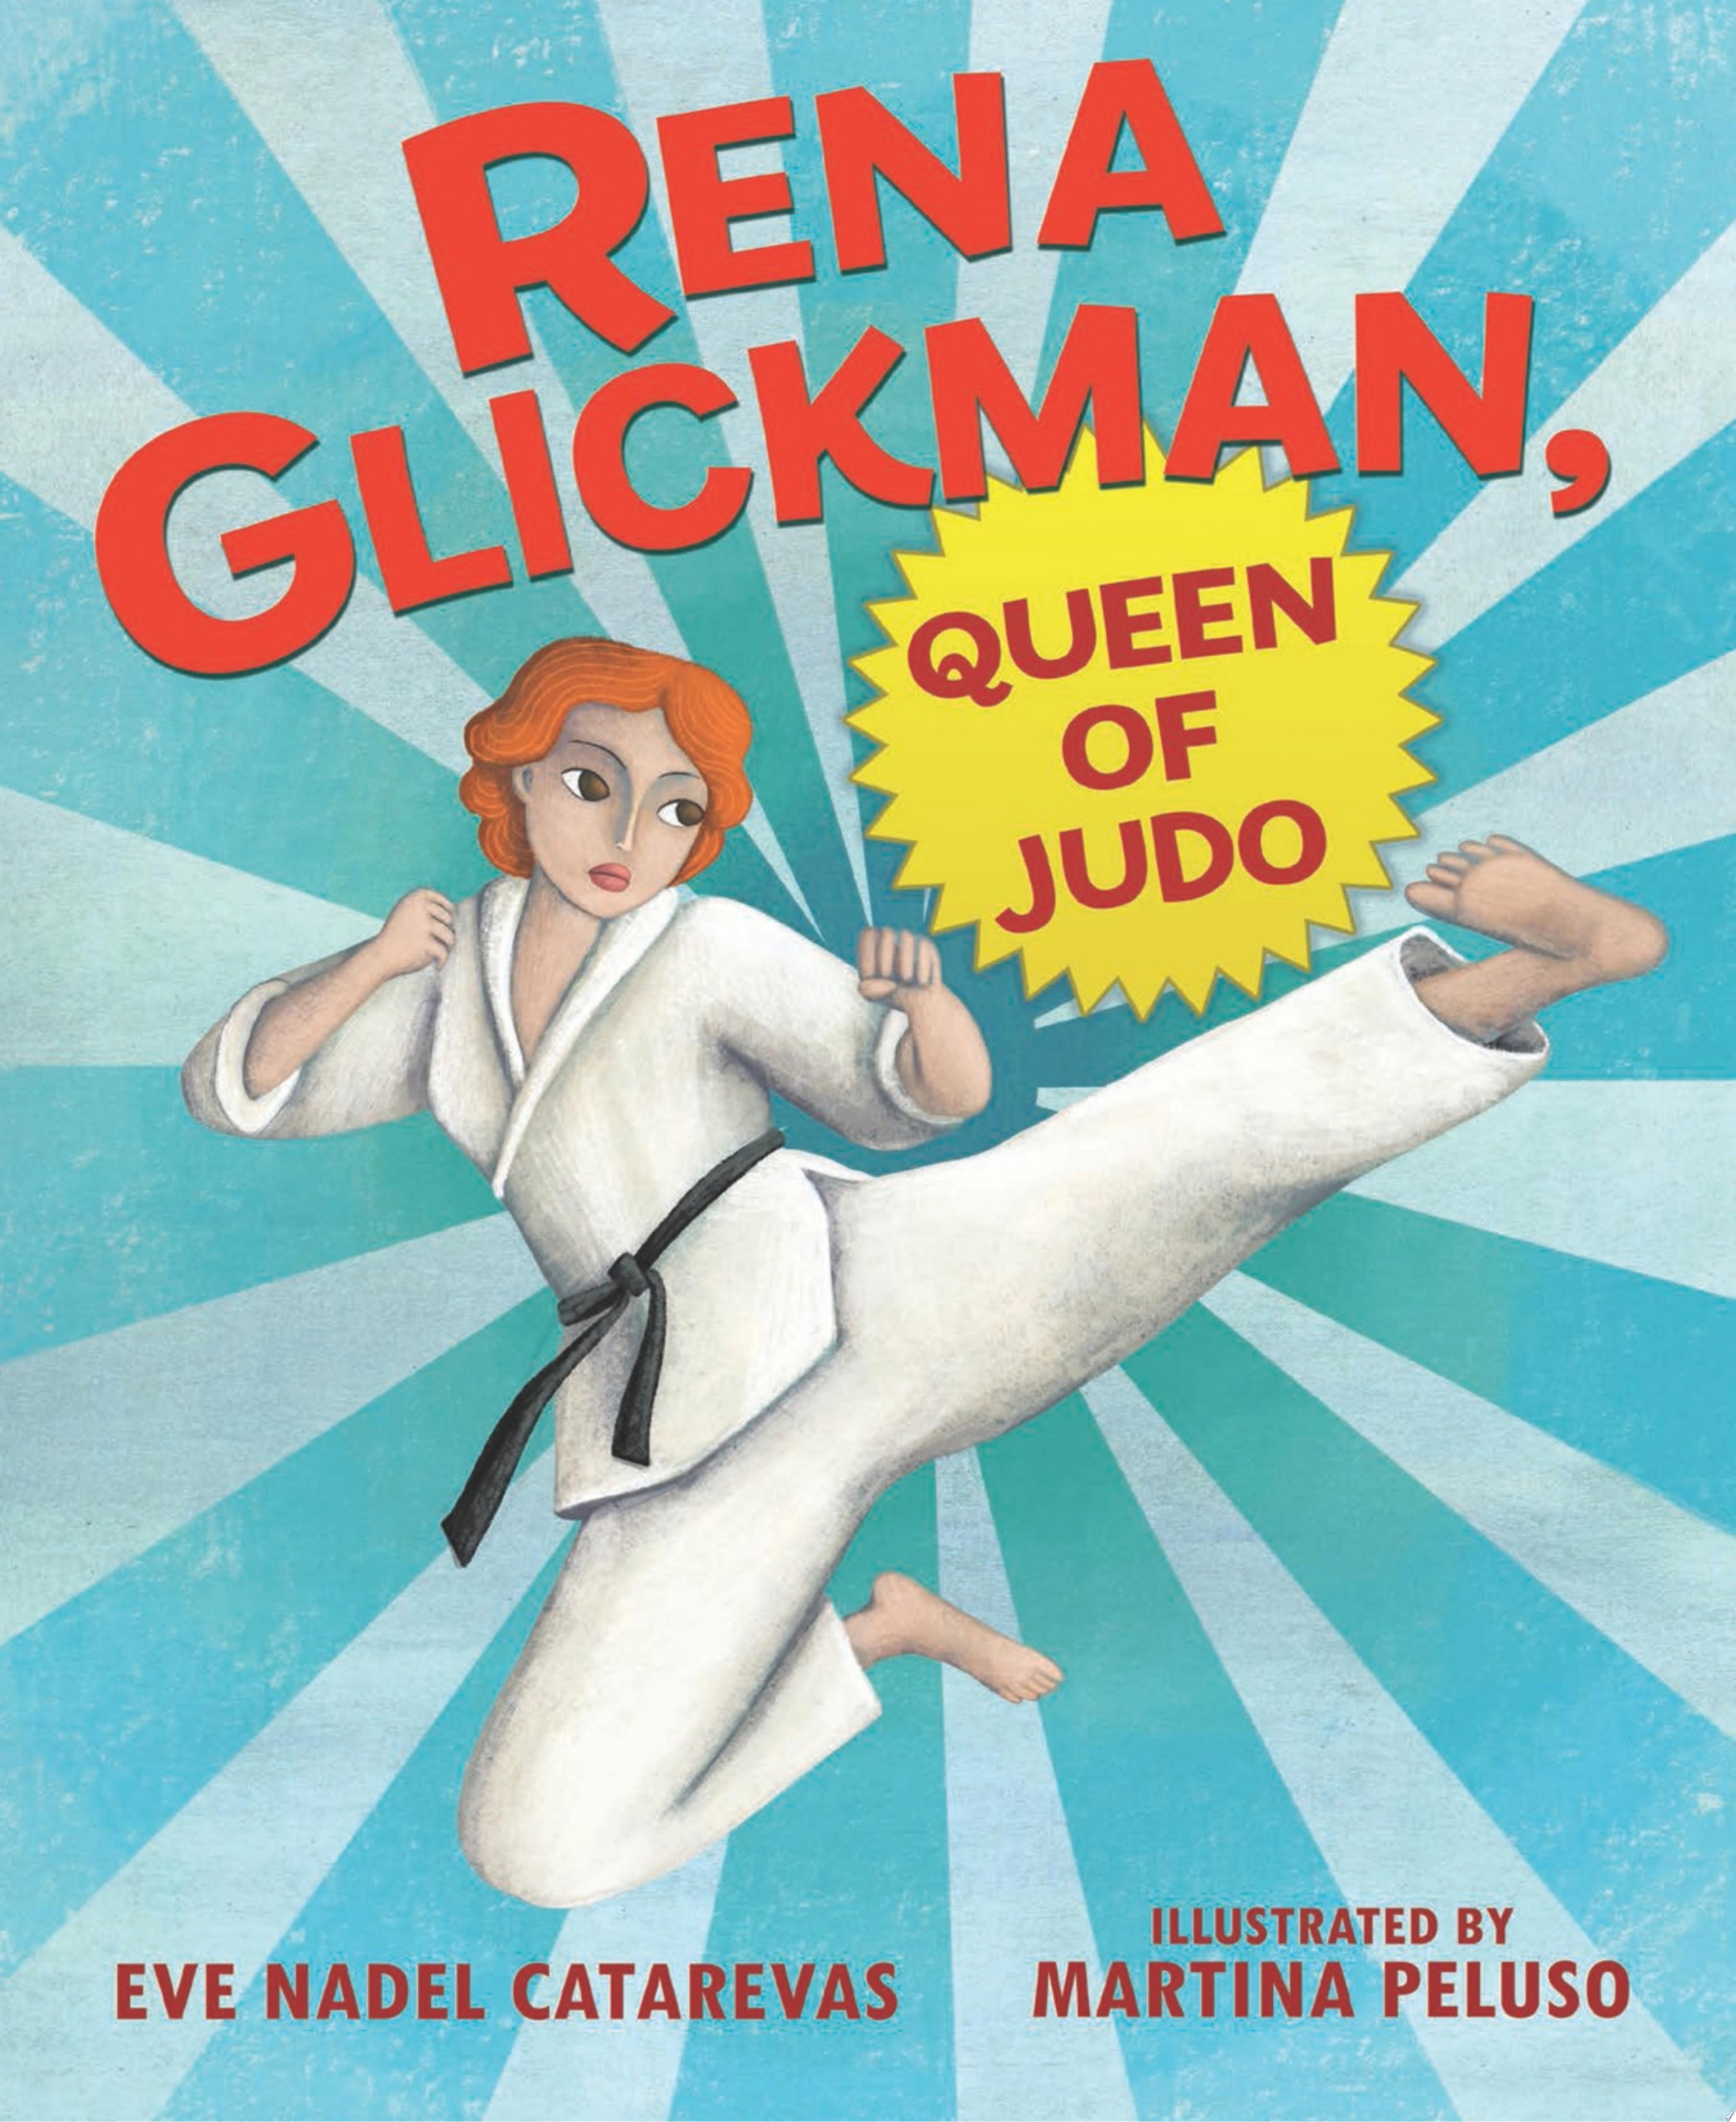 Image for "Rena Glickman, Queen of Judo"